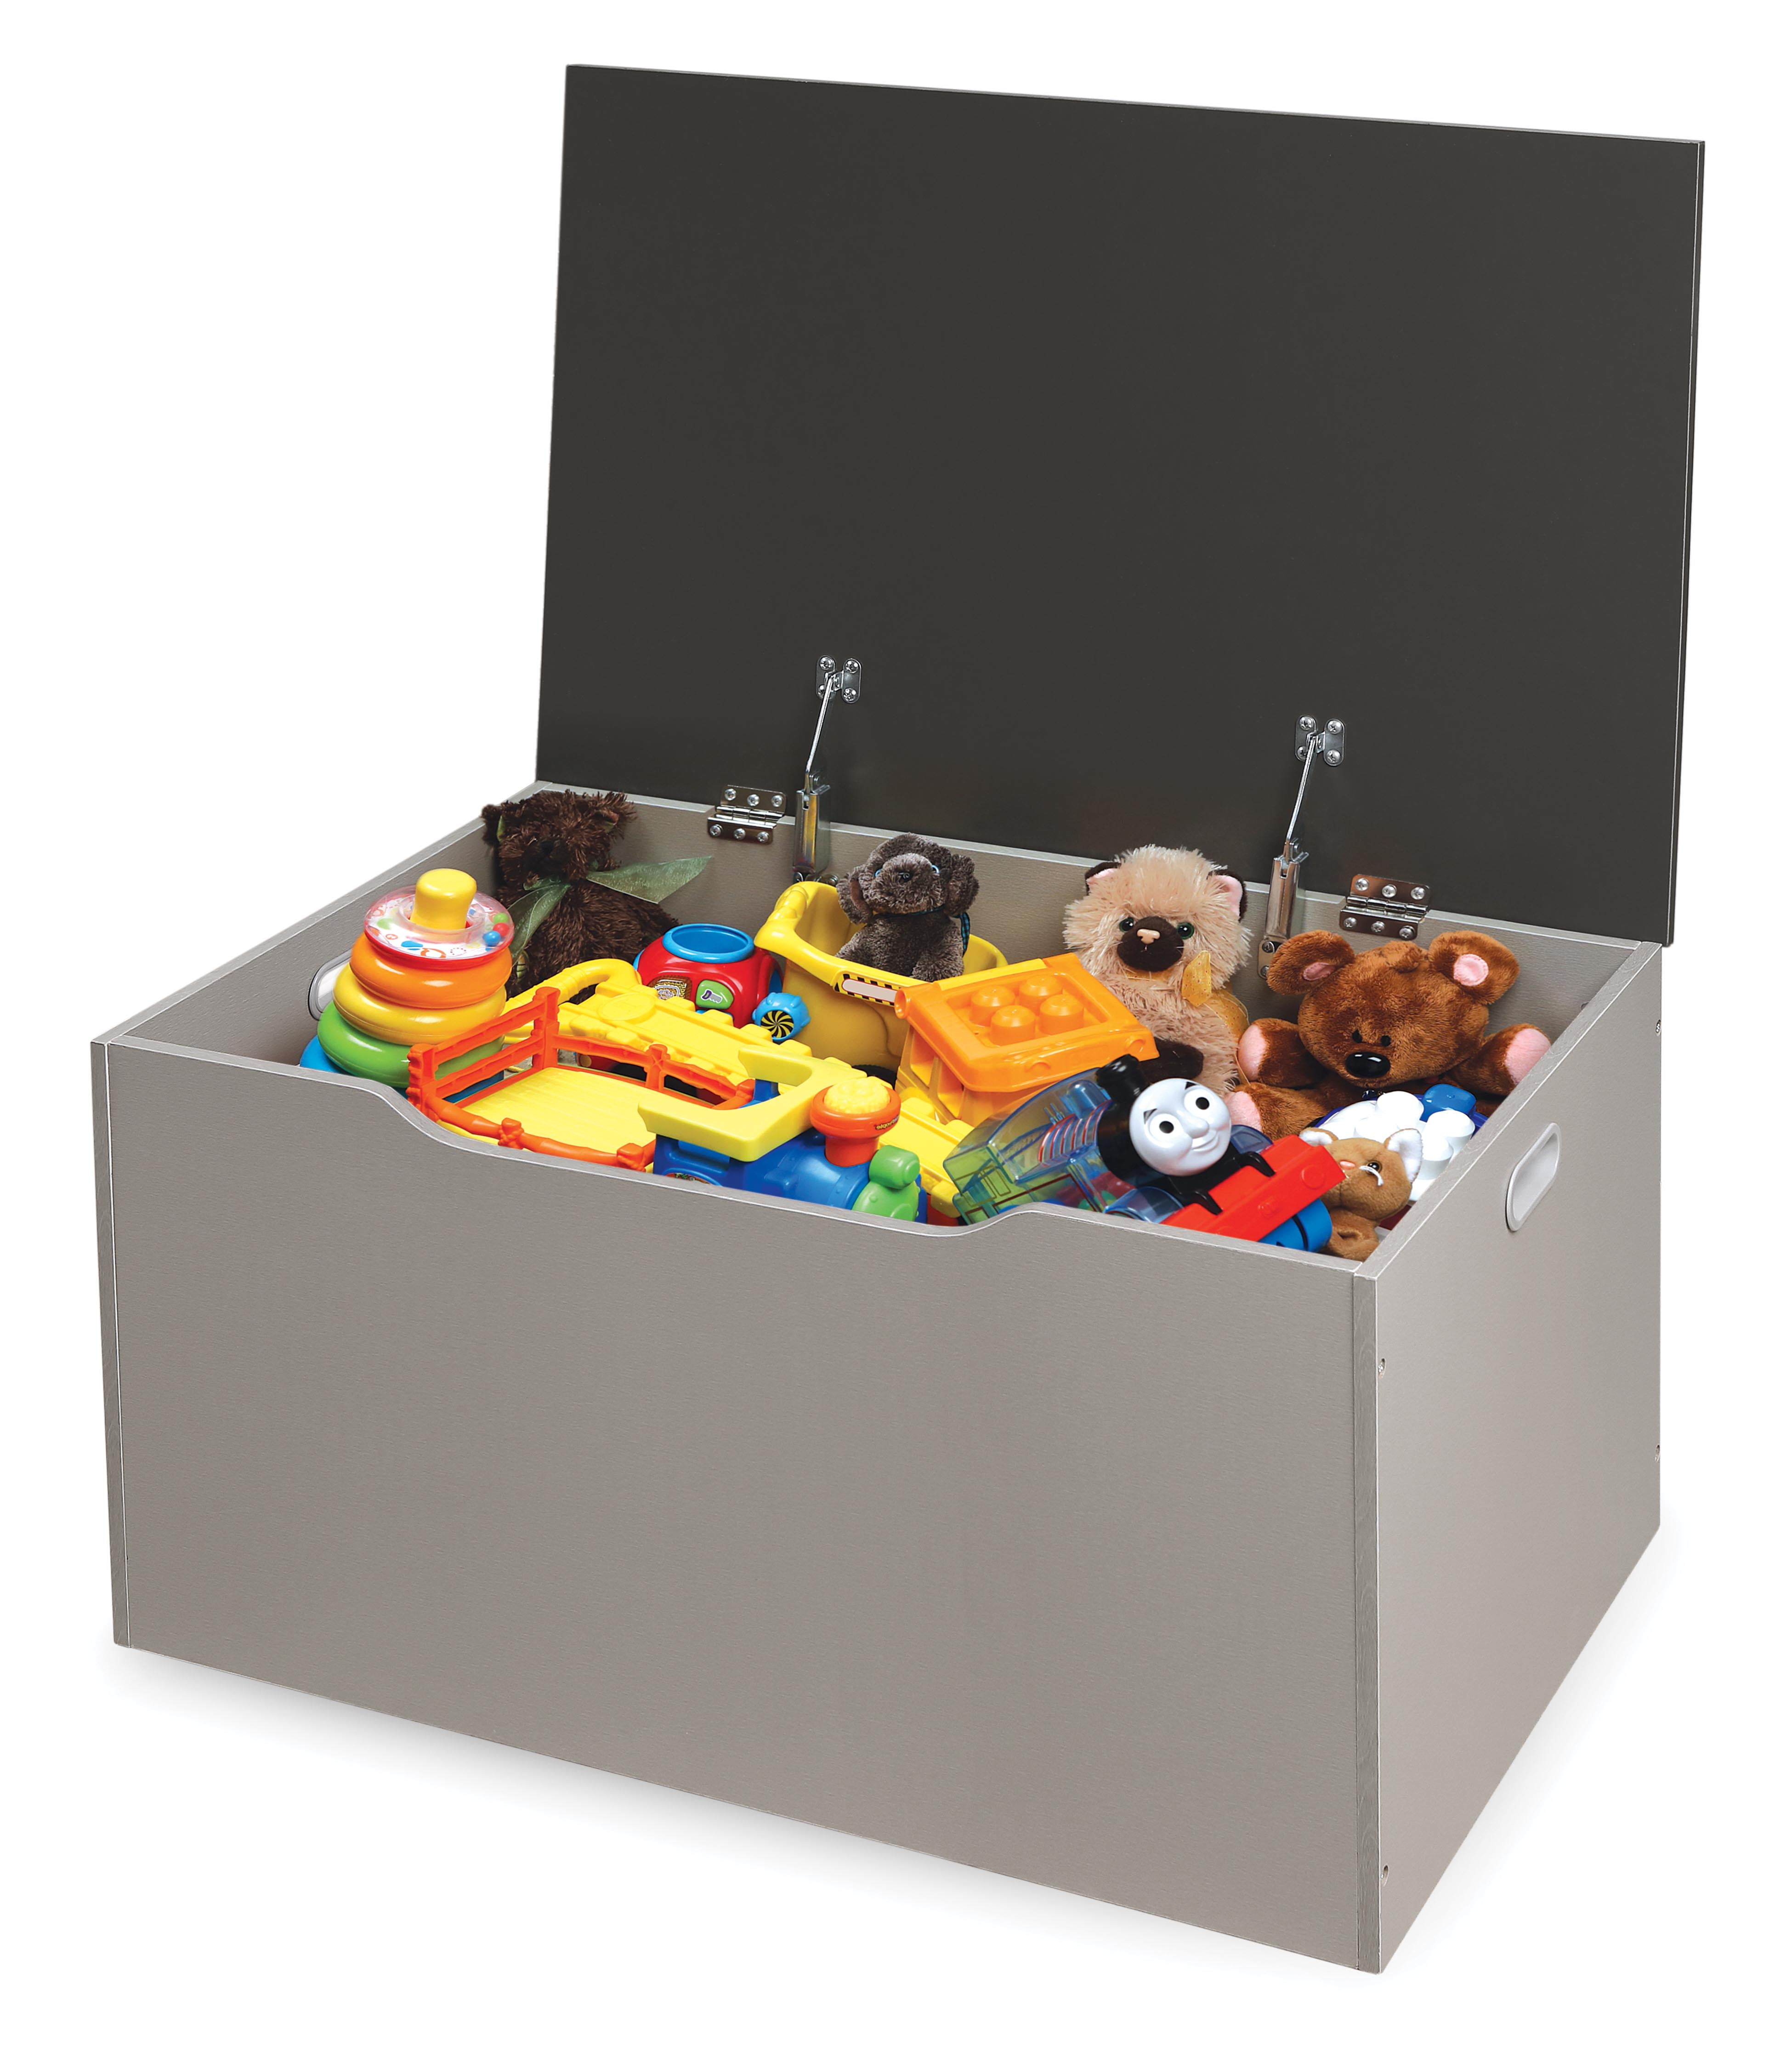  Badger Basket Kids Wooden Toy Box And Storage Bench Seat